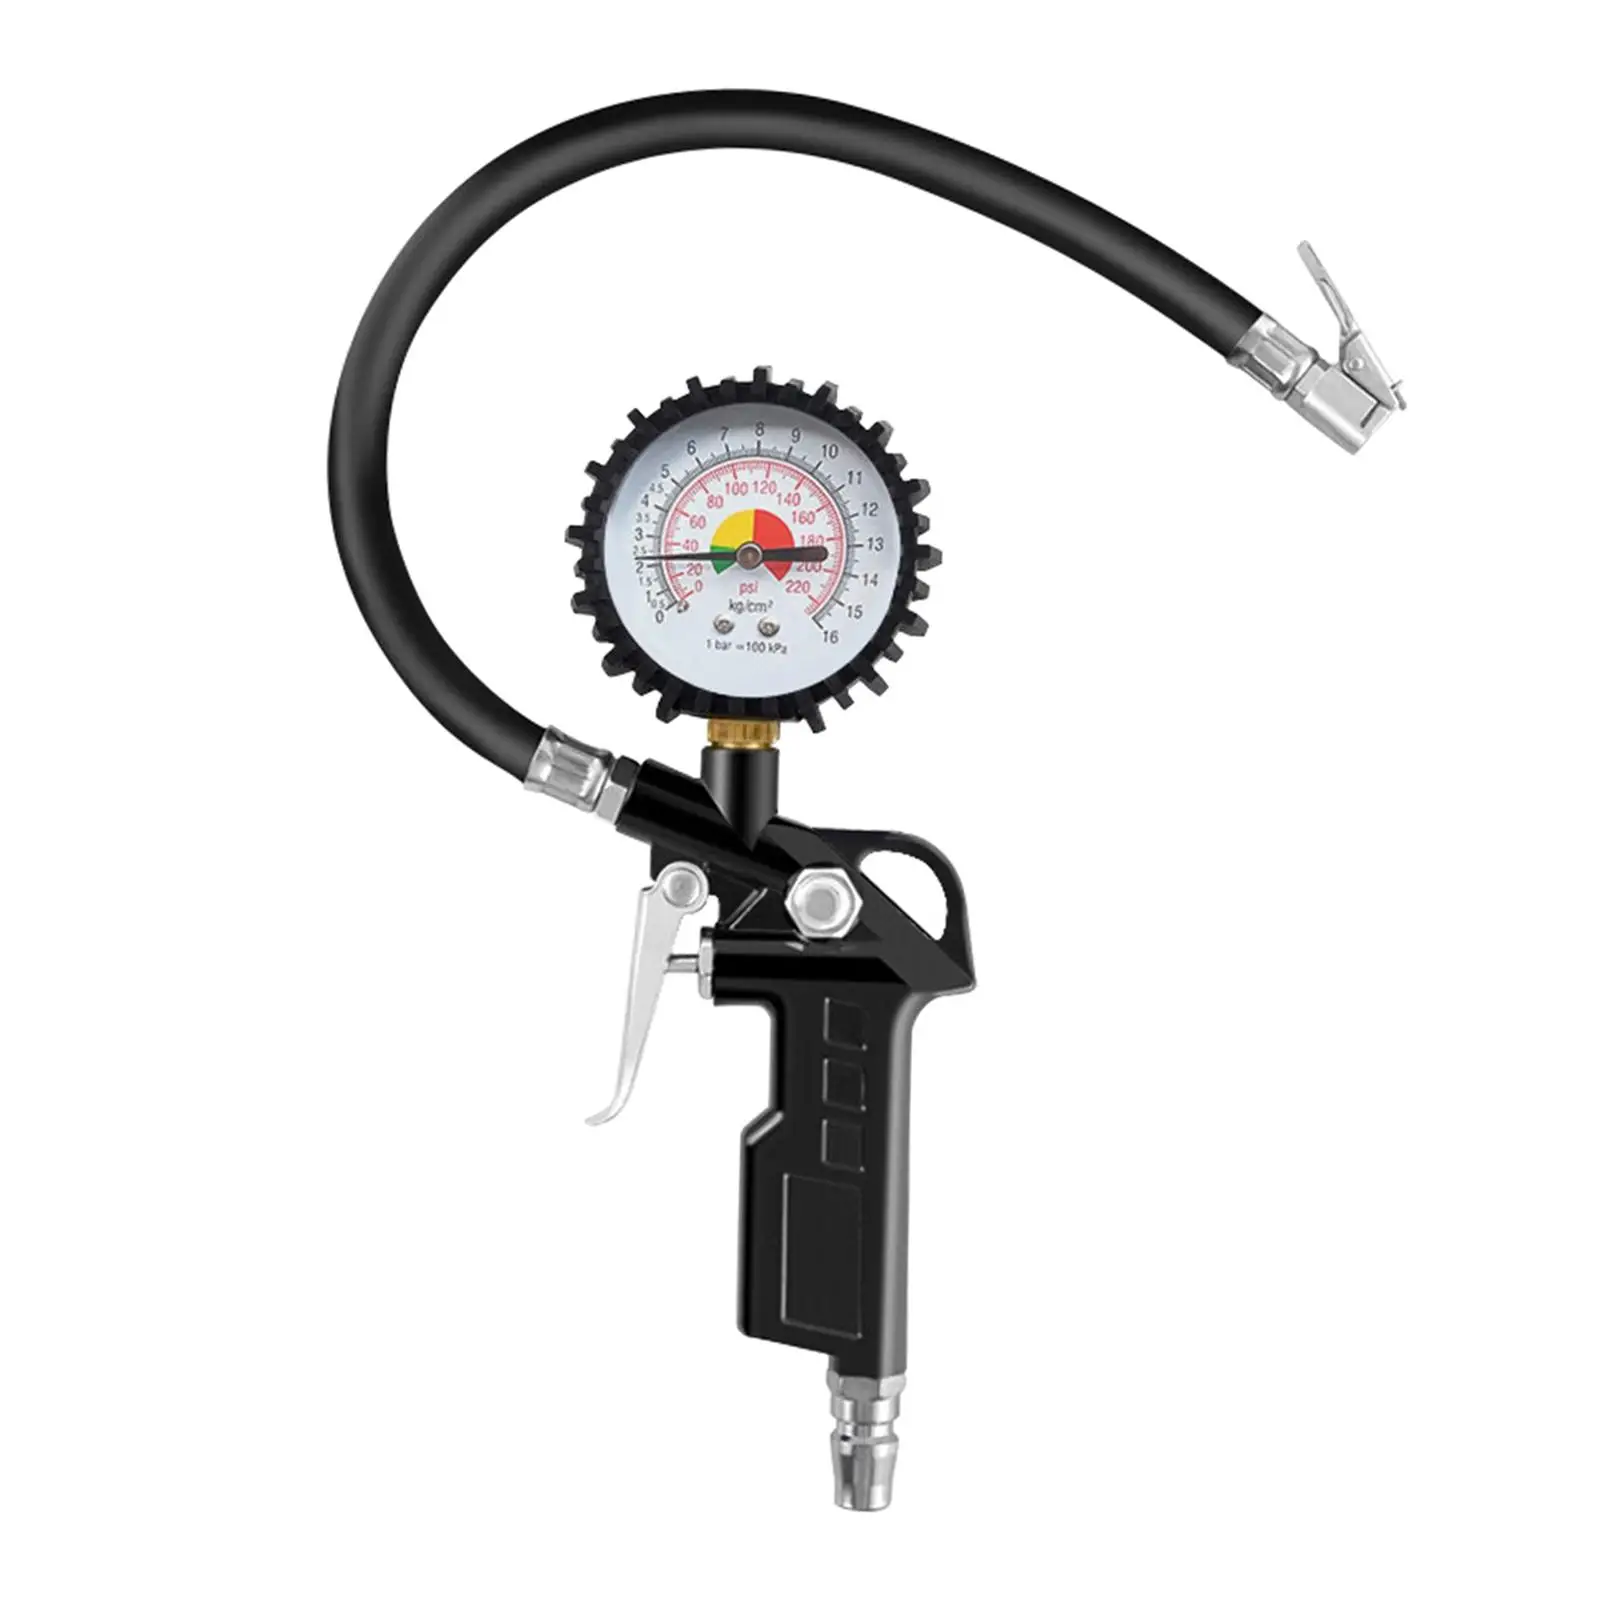 Universal Tire Pressure Gauge Meter Measurement Tool Long Tube Handheld High Precision Tire Pressure Tester for Car RV SUV